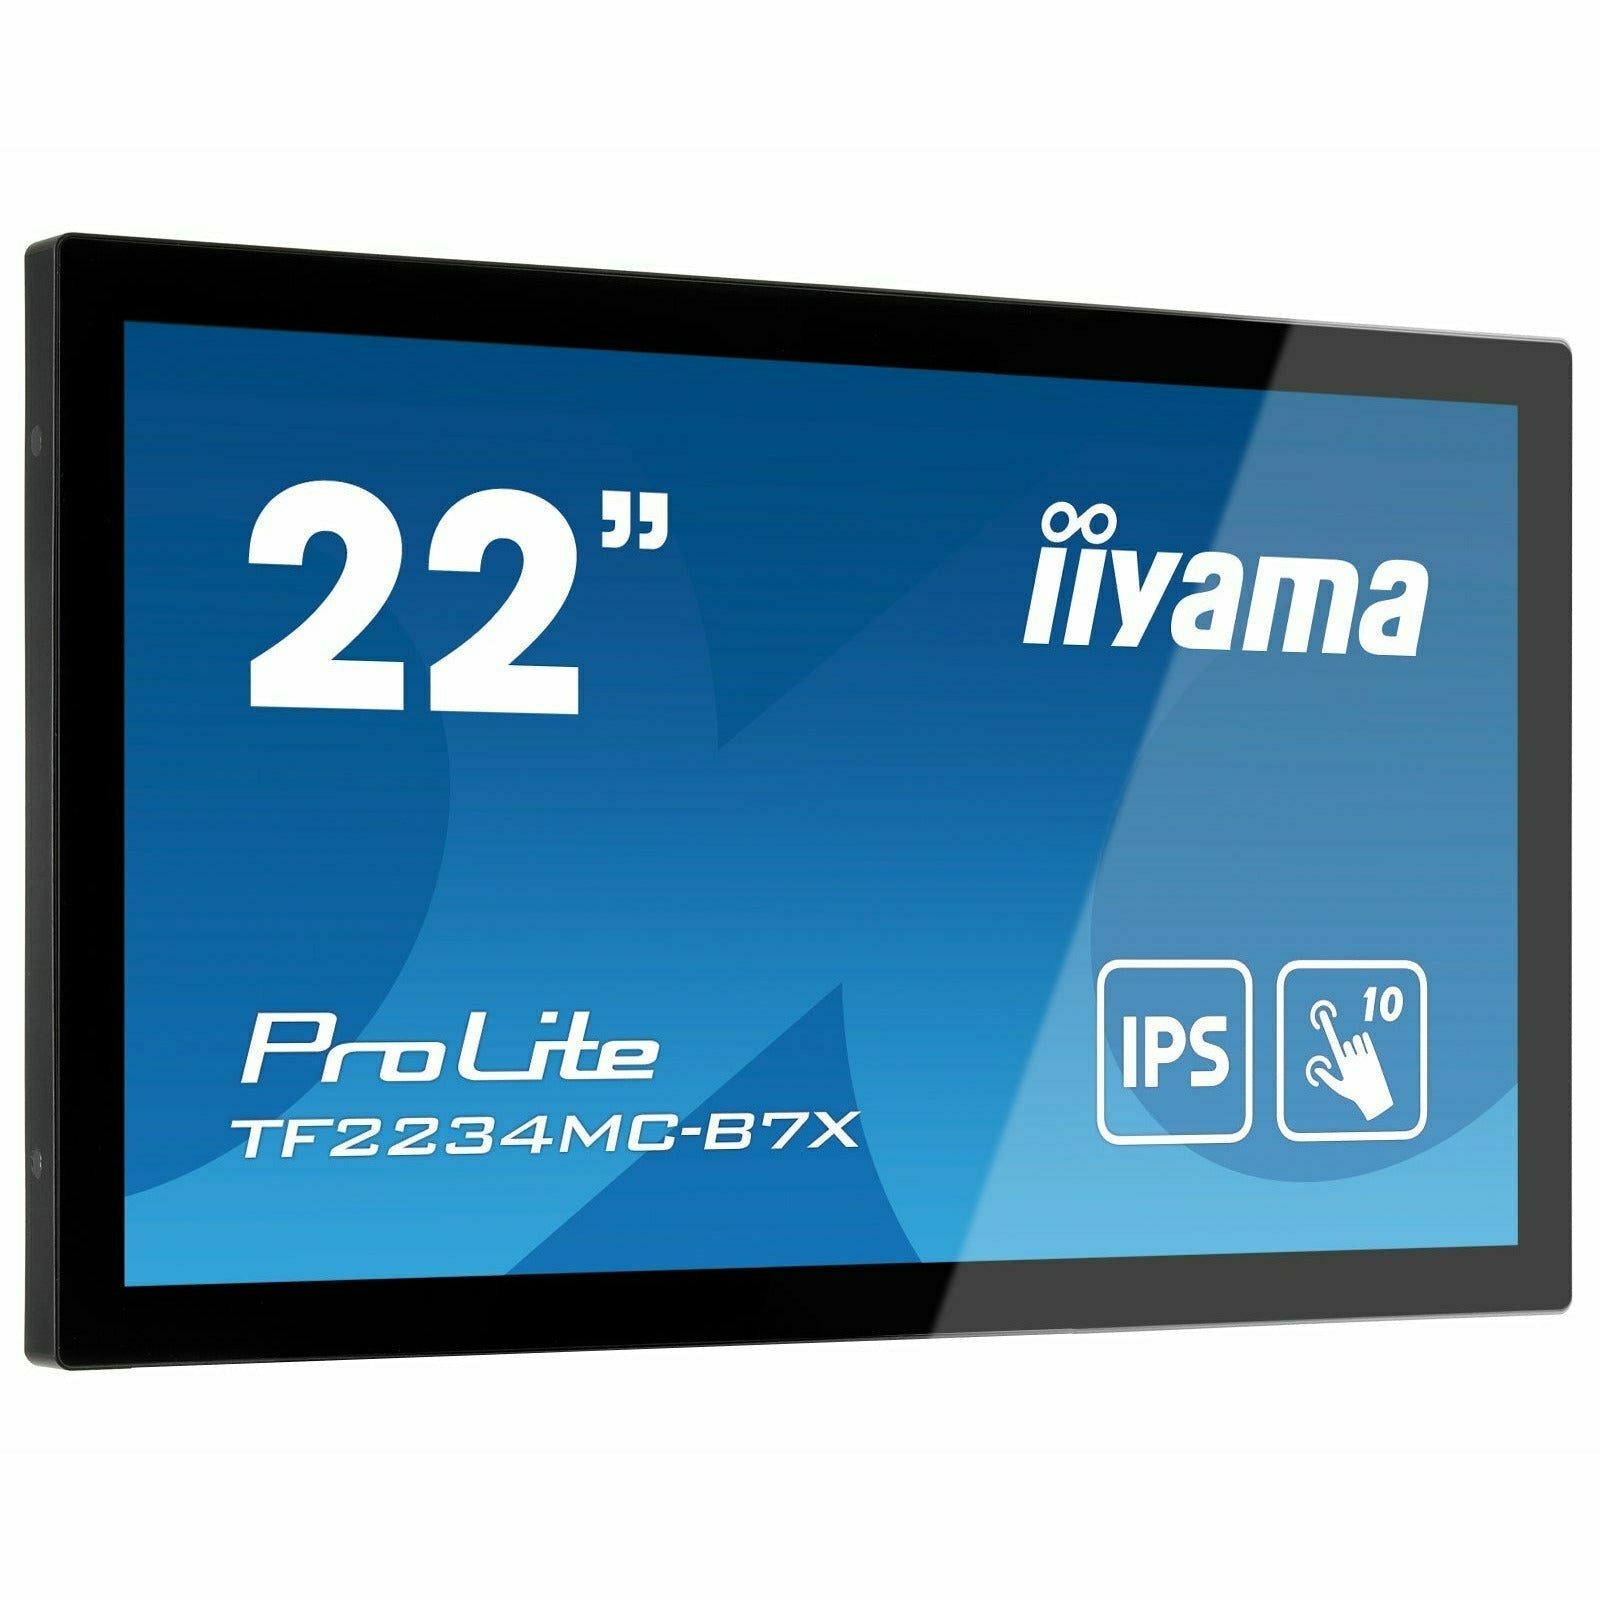 iiyama ProLite TF2234MC-B7X 22" Capacitive Touch Screen IPS Display